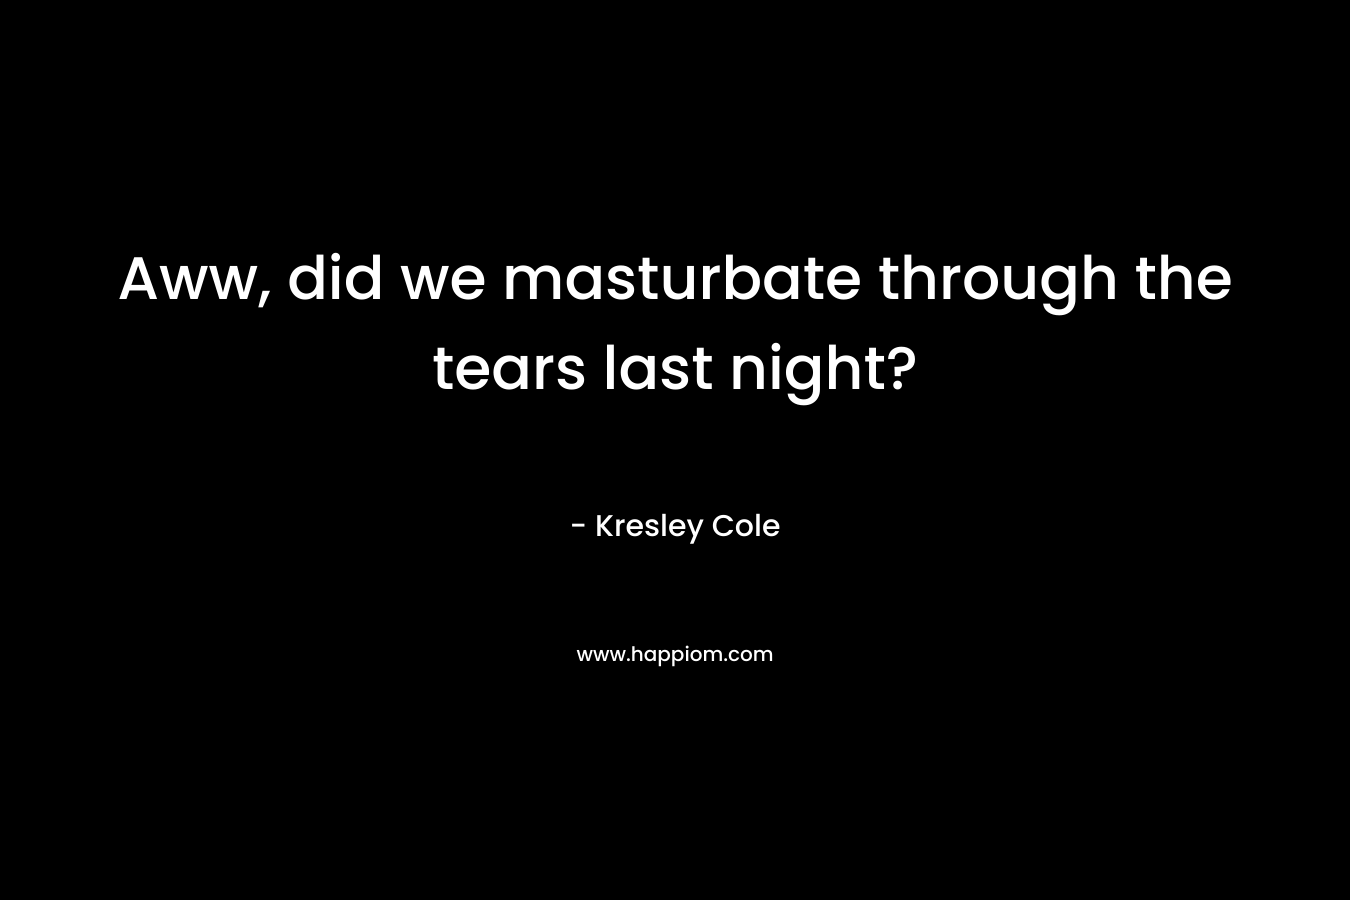 Aww, did we masturbate through the tears last night?